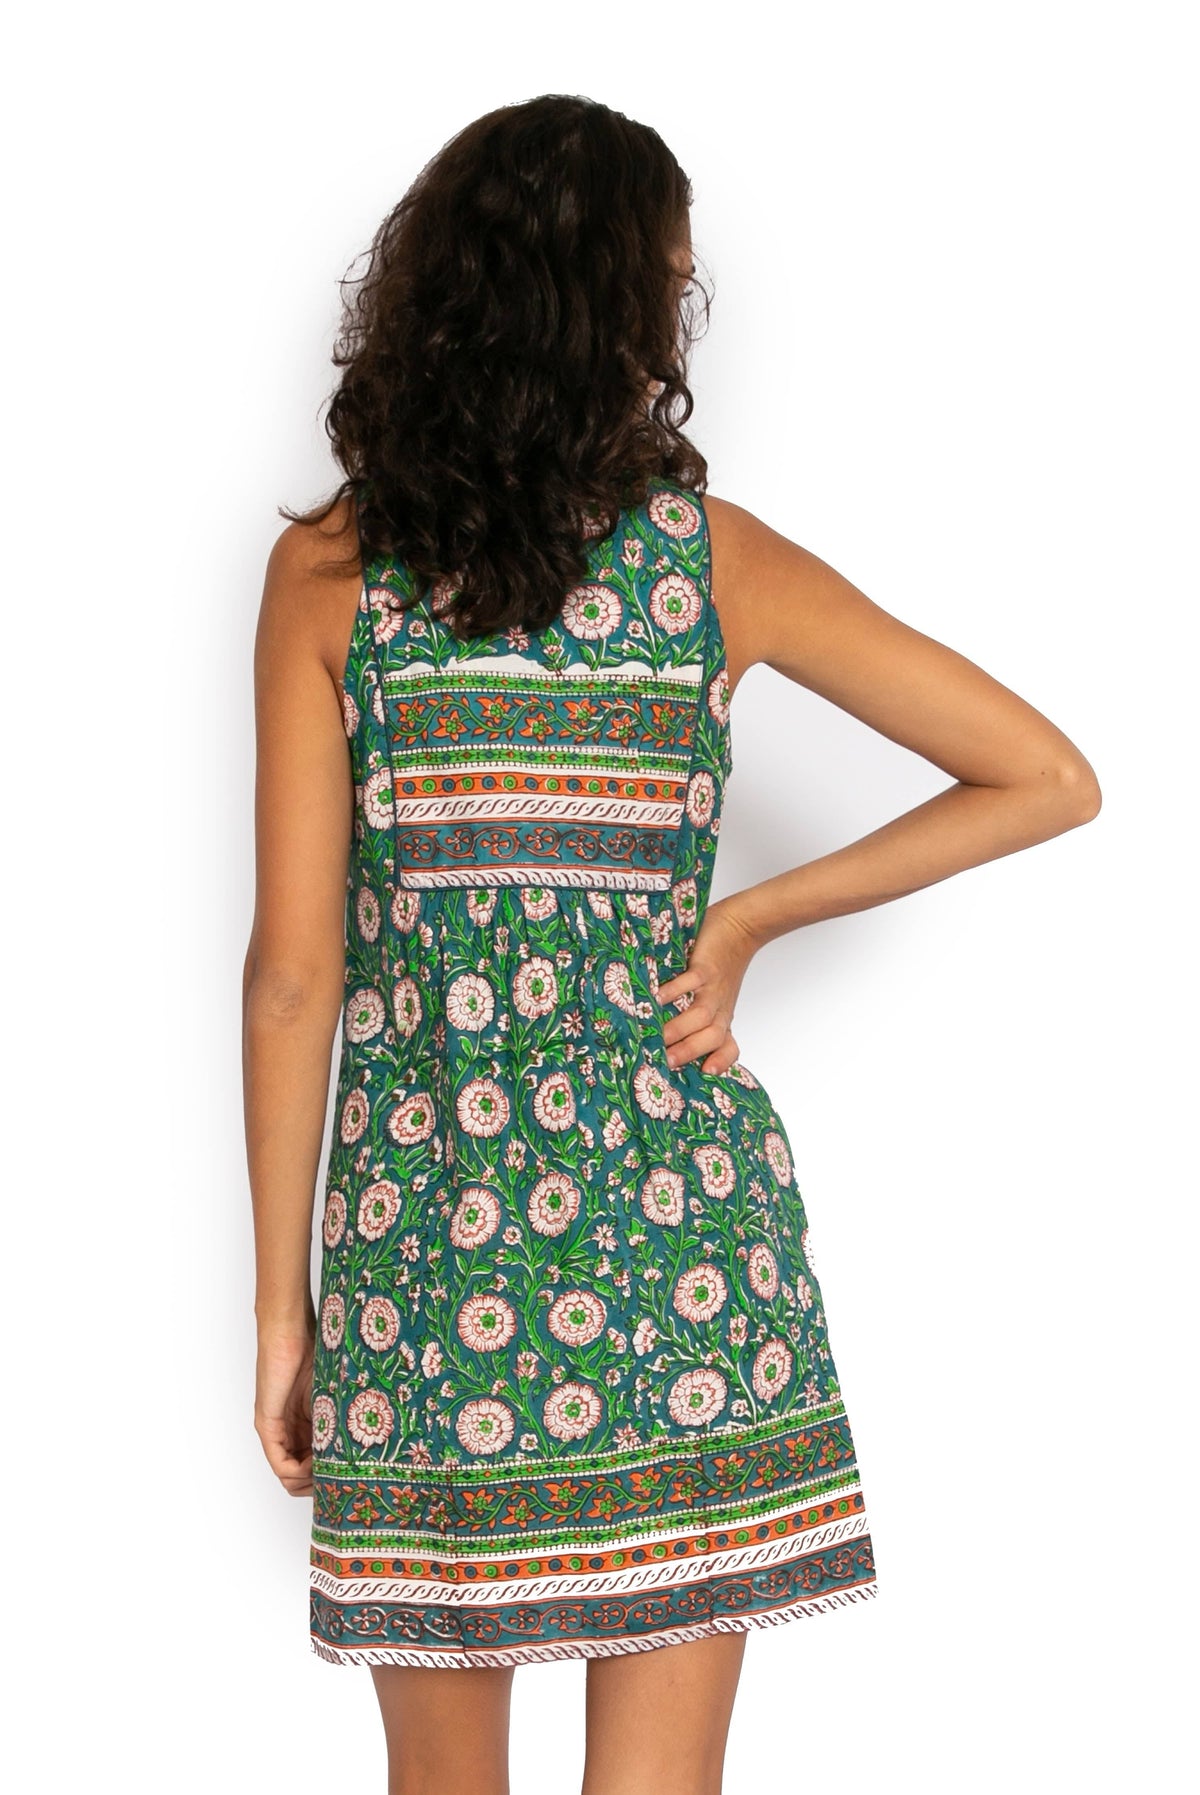 Jaipur Dress Short - Teal Flower Block Print* - OM Designs - Splash Swimwear  - dress, May23, new arrivals, new clothing, new womens, OM Designs, women clothing - Splash Swimwear 